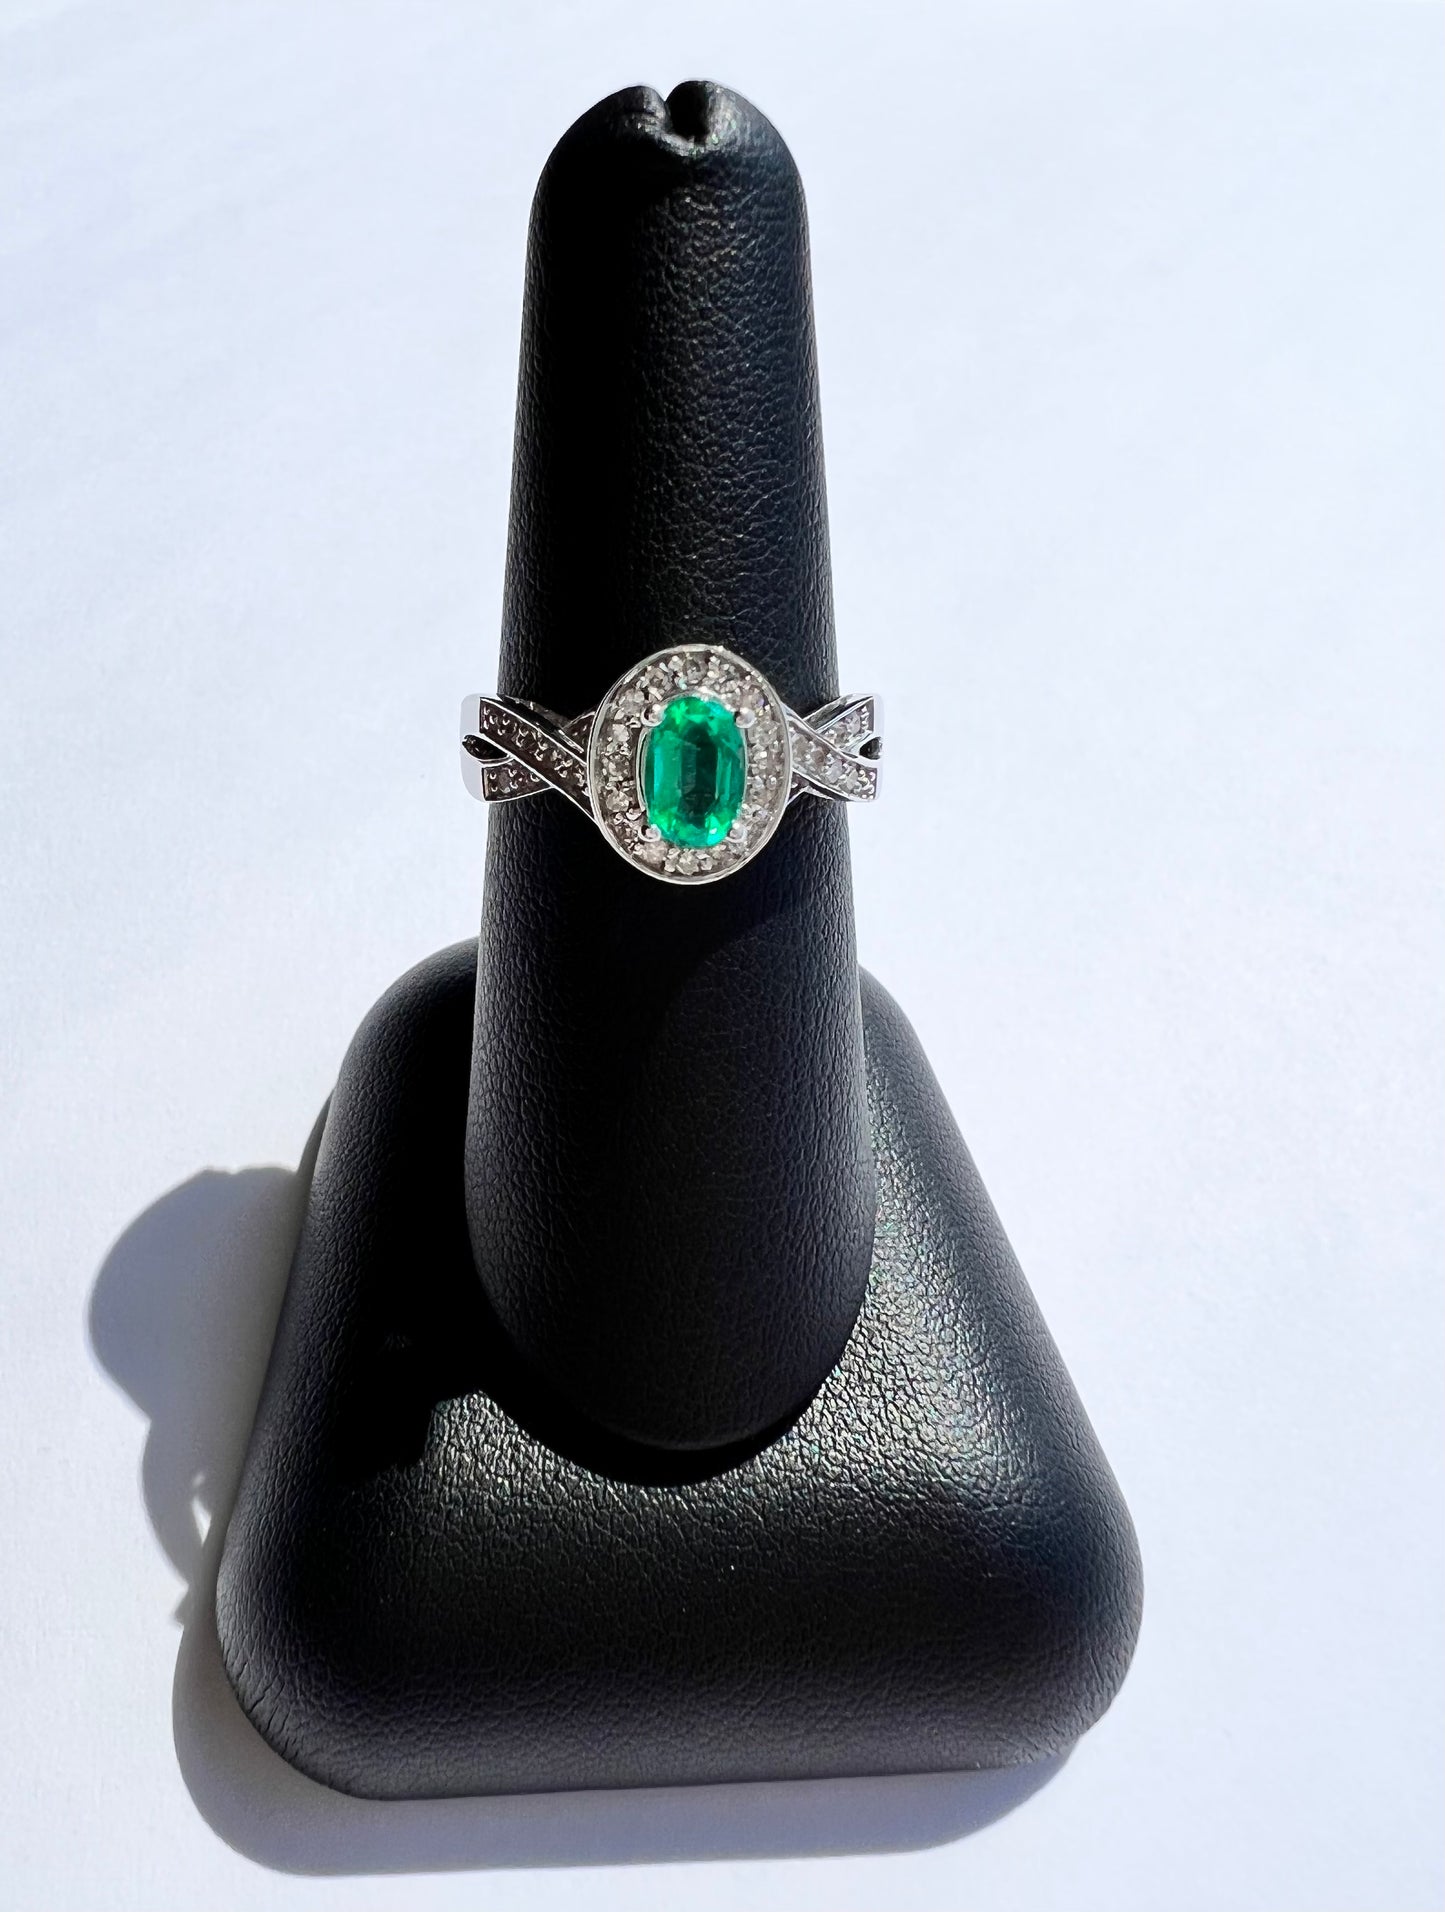 Vintage Inspired New 10K White Gold Genuine Emerald & Diamond Ring